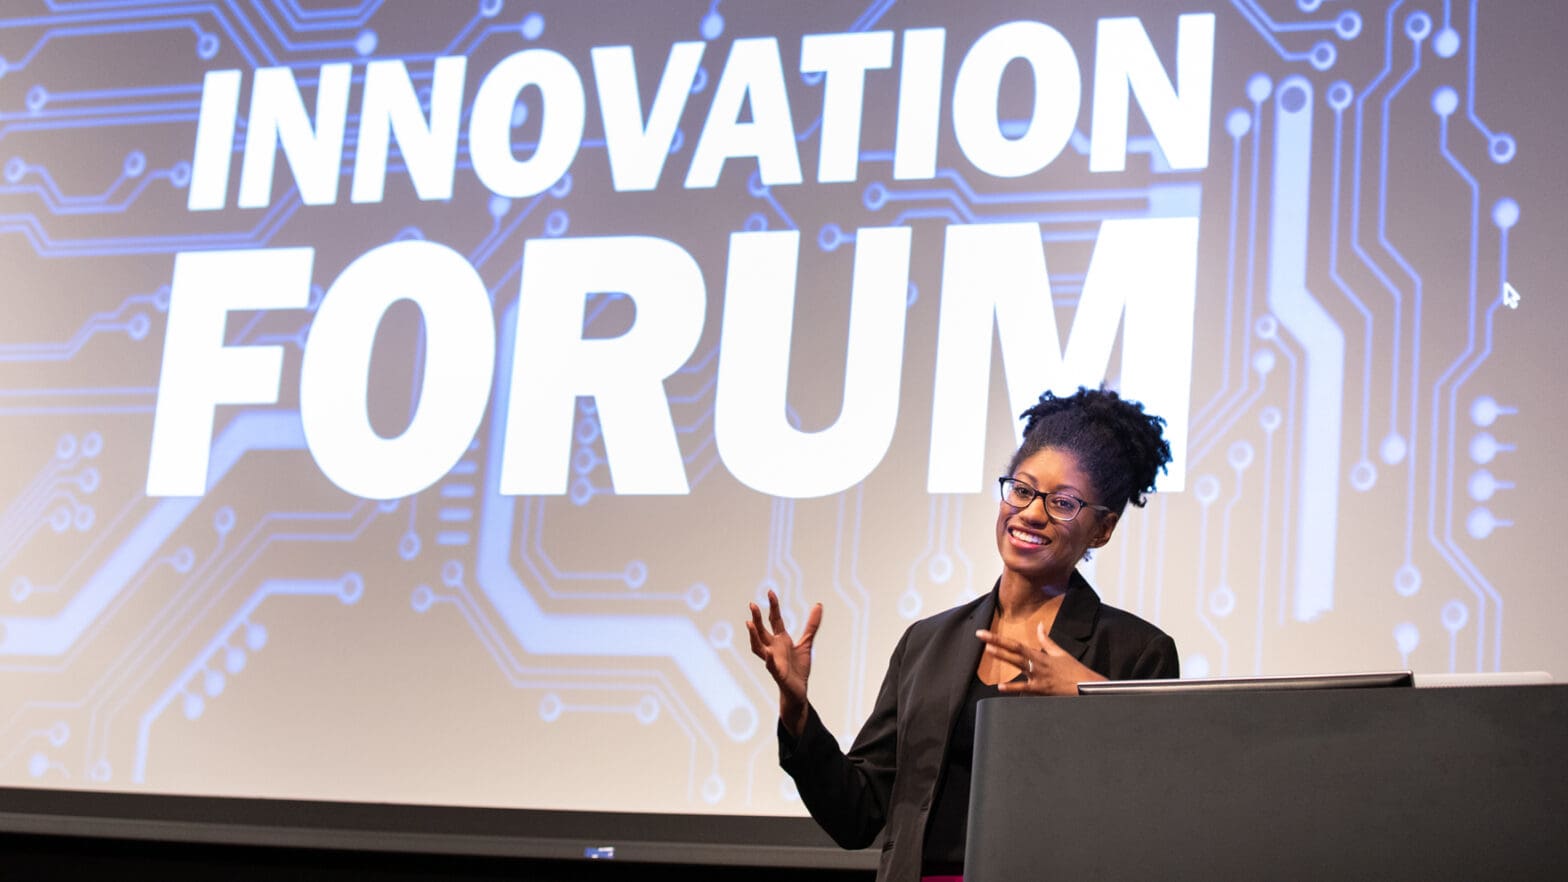 Higher education secretary speaks at the Innovation Forum